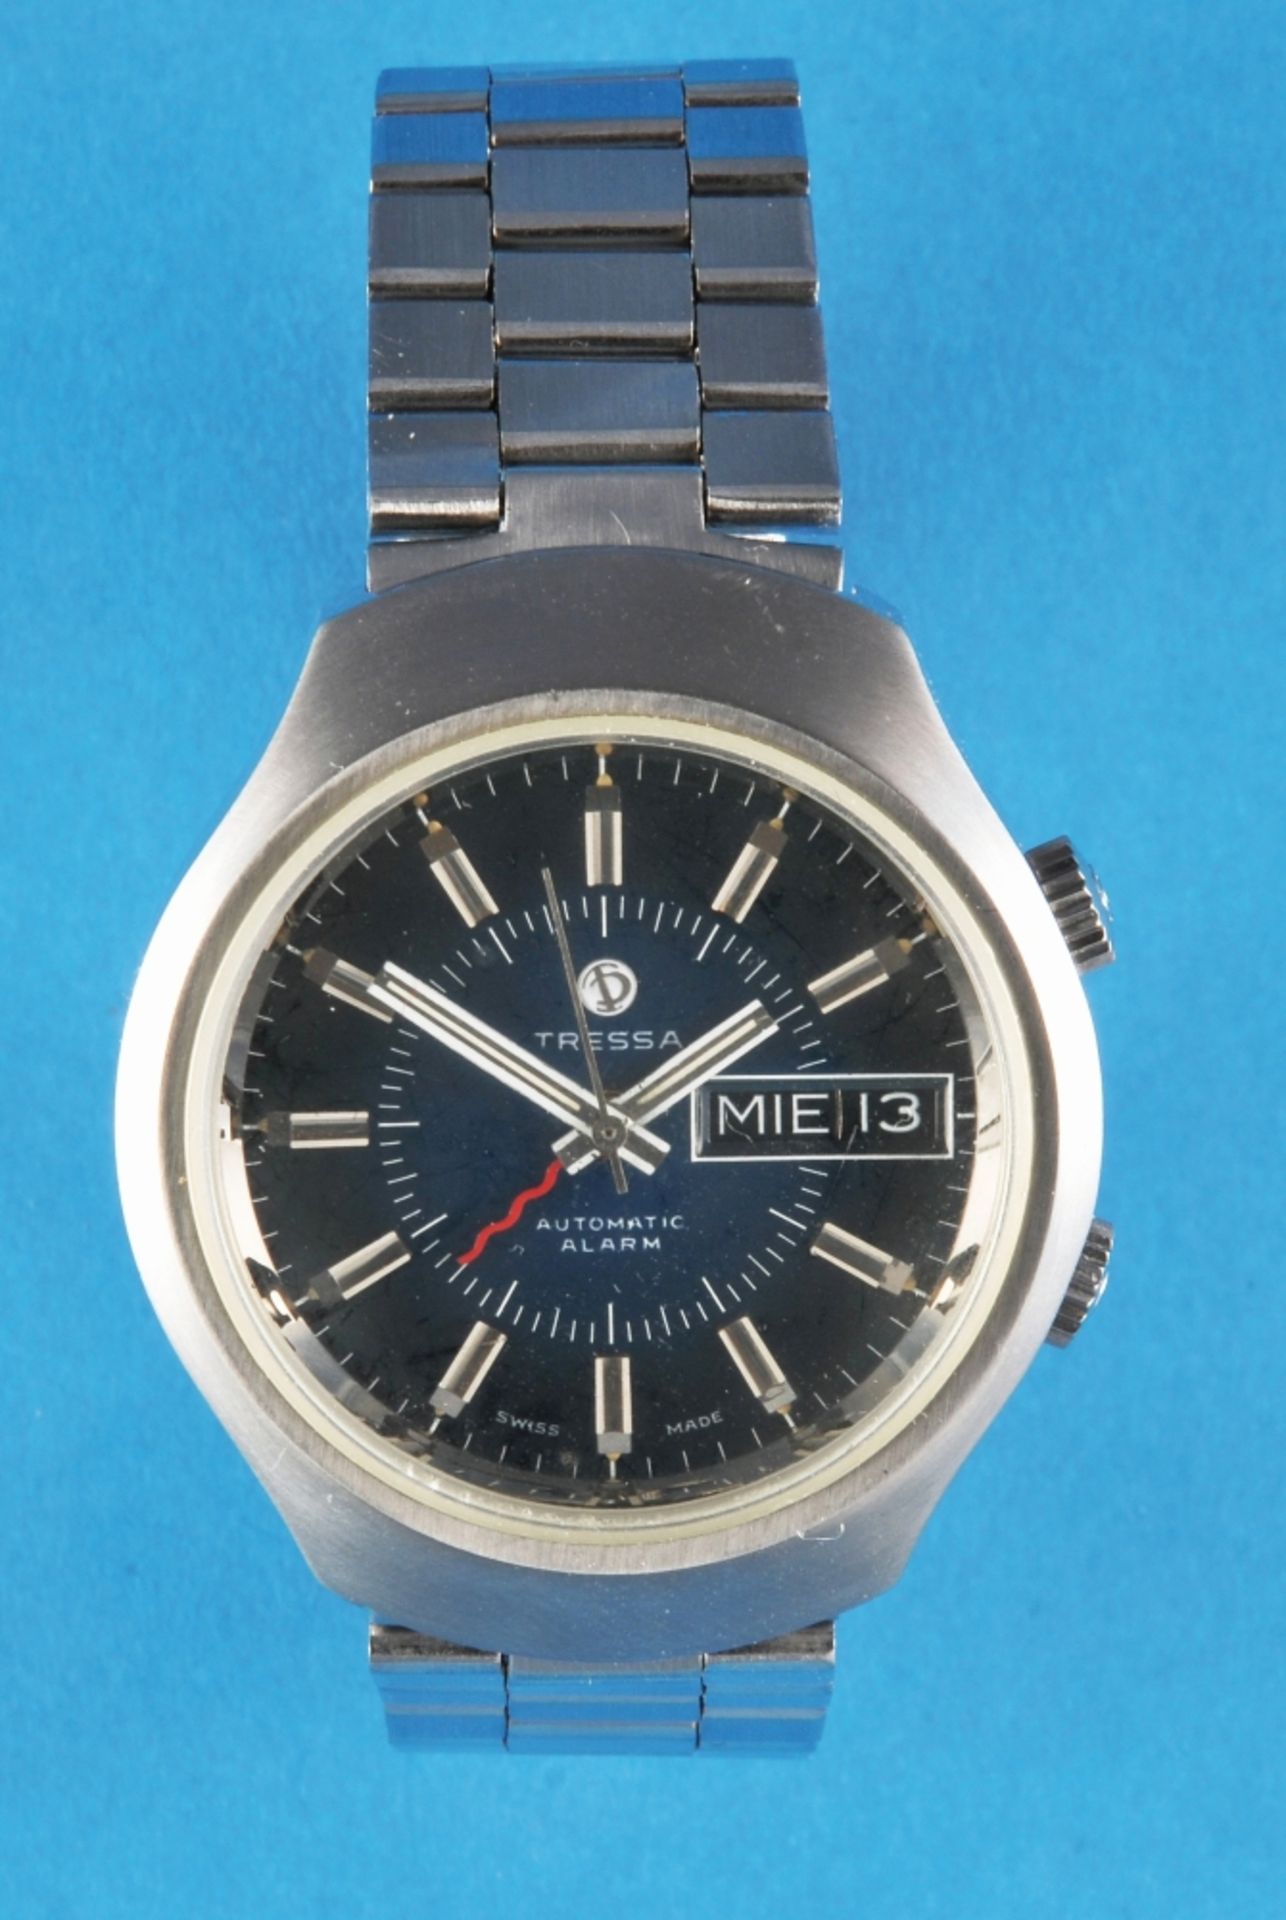 Tressa Automatic Alarm, steel wristwatch with calaendart